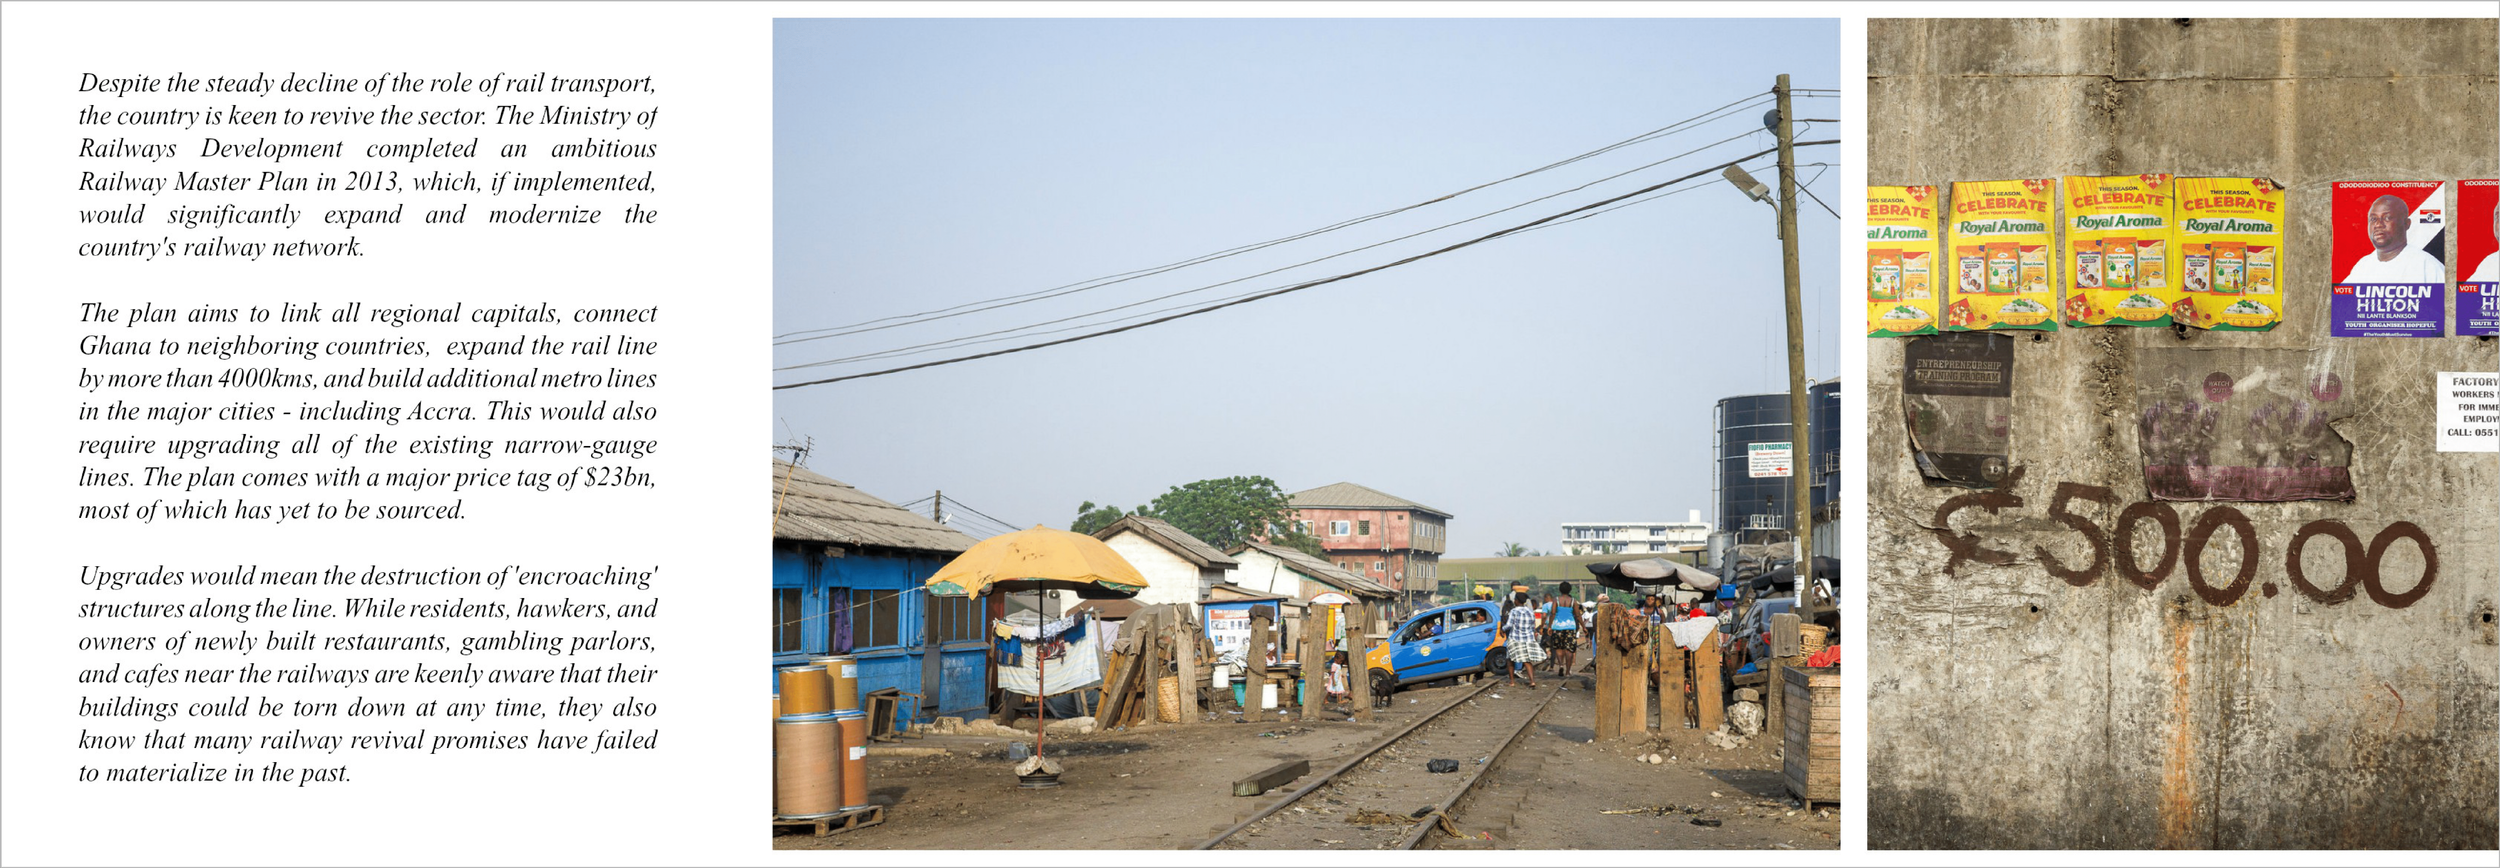 Accra Railways2-06.png